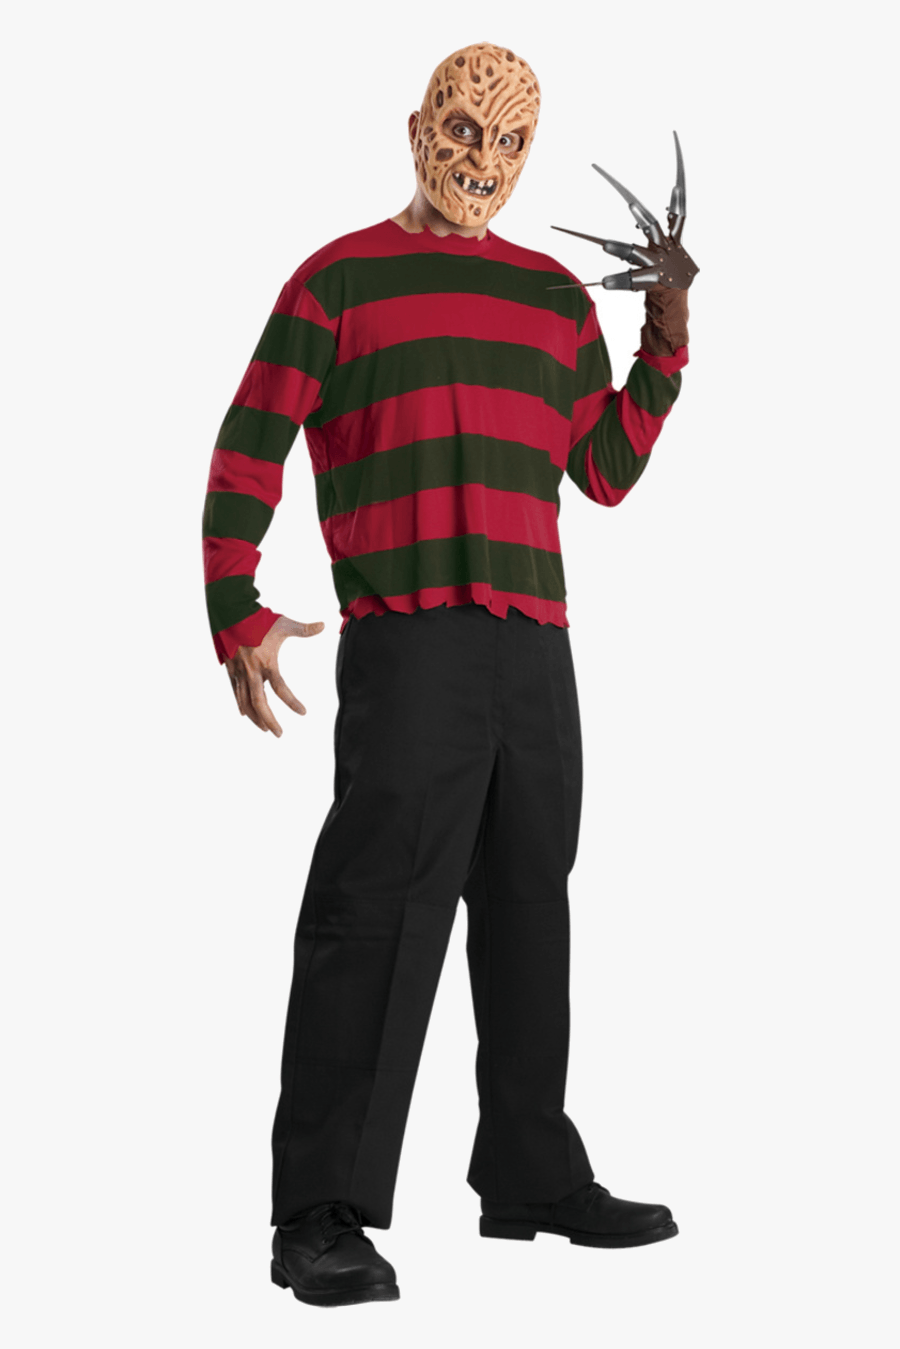 Transparent Freddy Krueger Clipart - Freddy Krueger Costume, Transparent Clipart